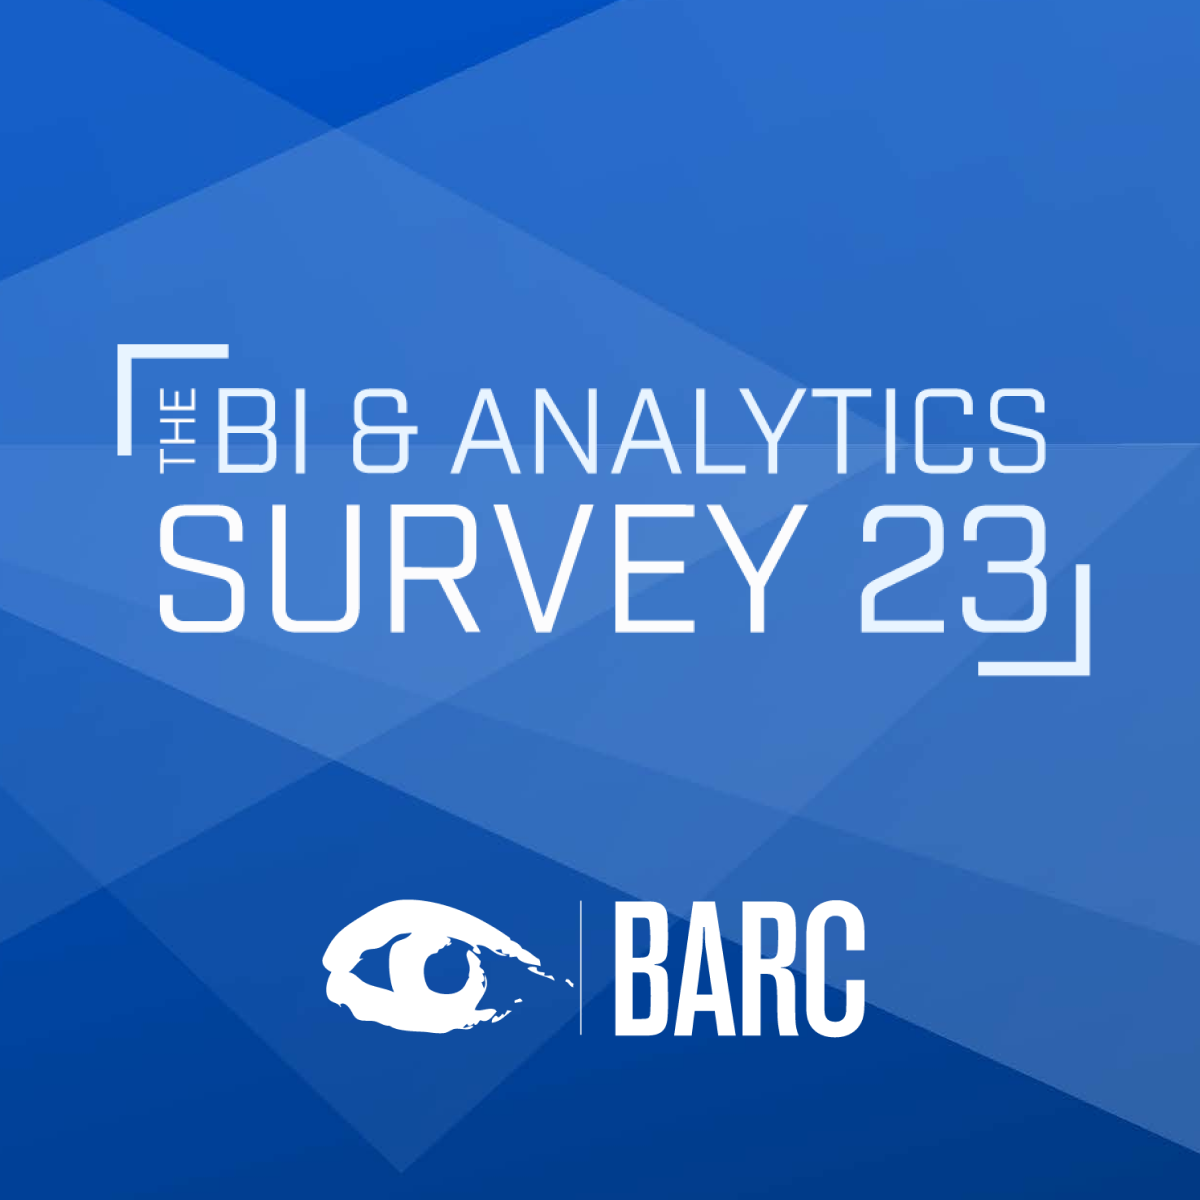 TARGIT in BARCs The BI & Analytics Survey 23